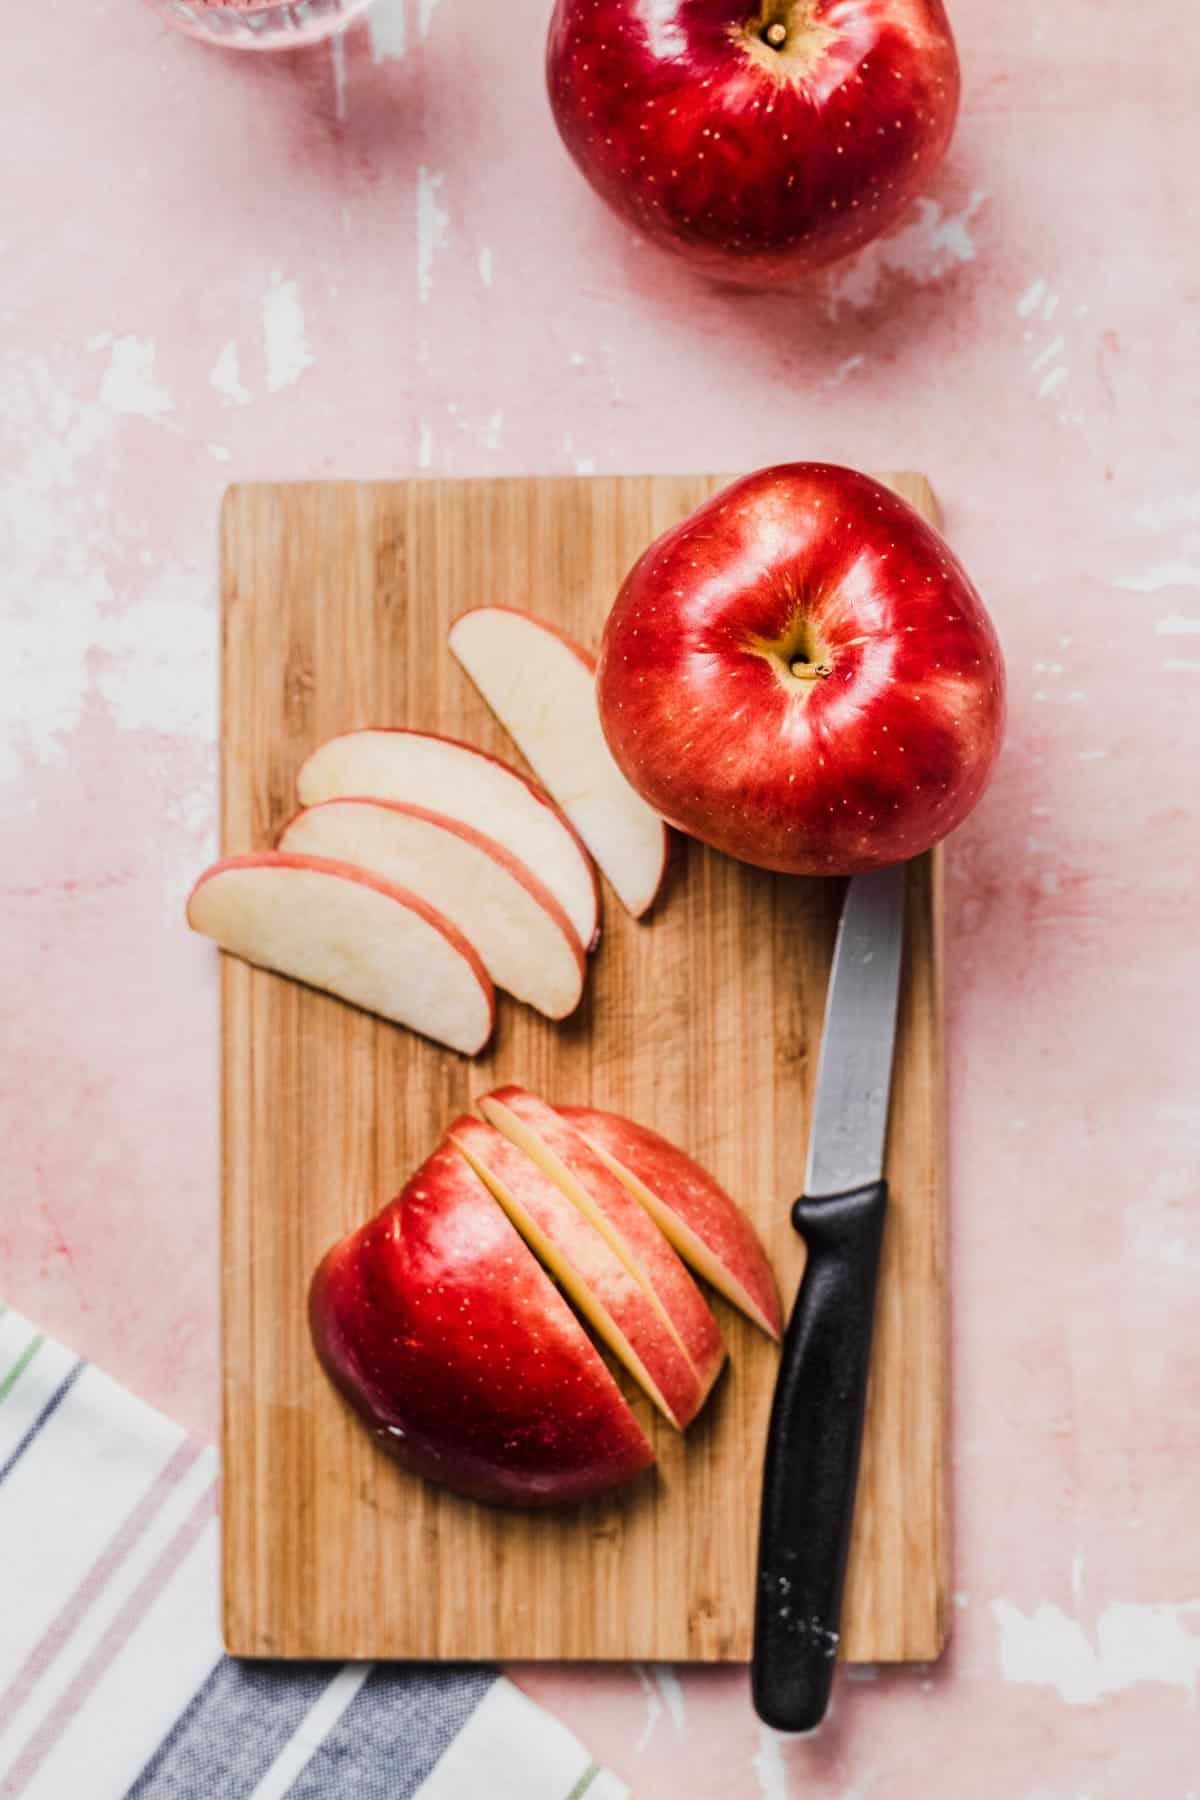 Birds eye view of sliced apple on a cutting board.